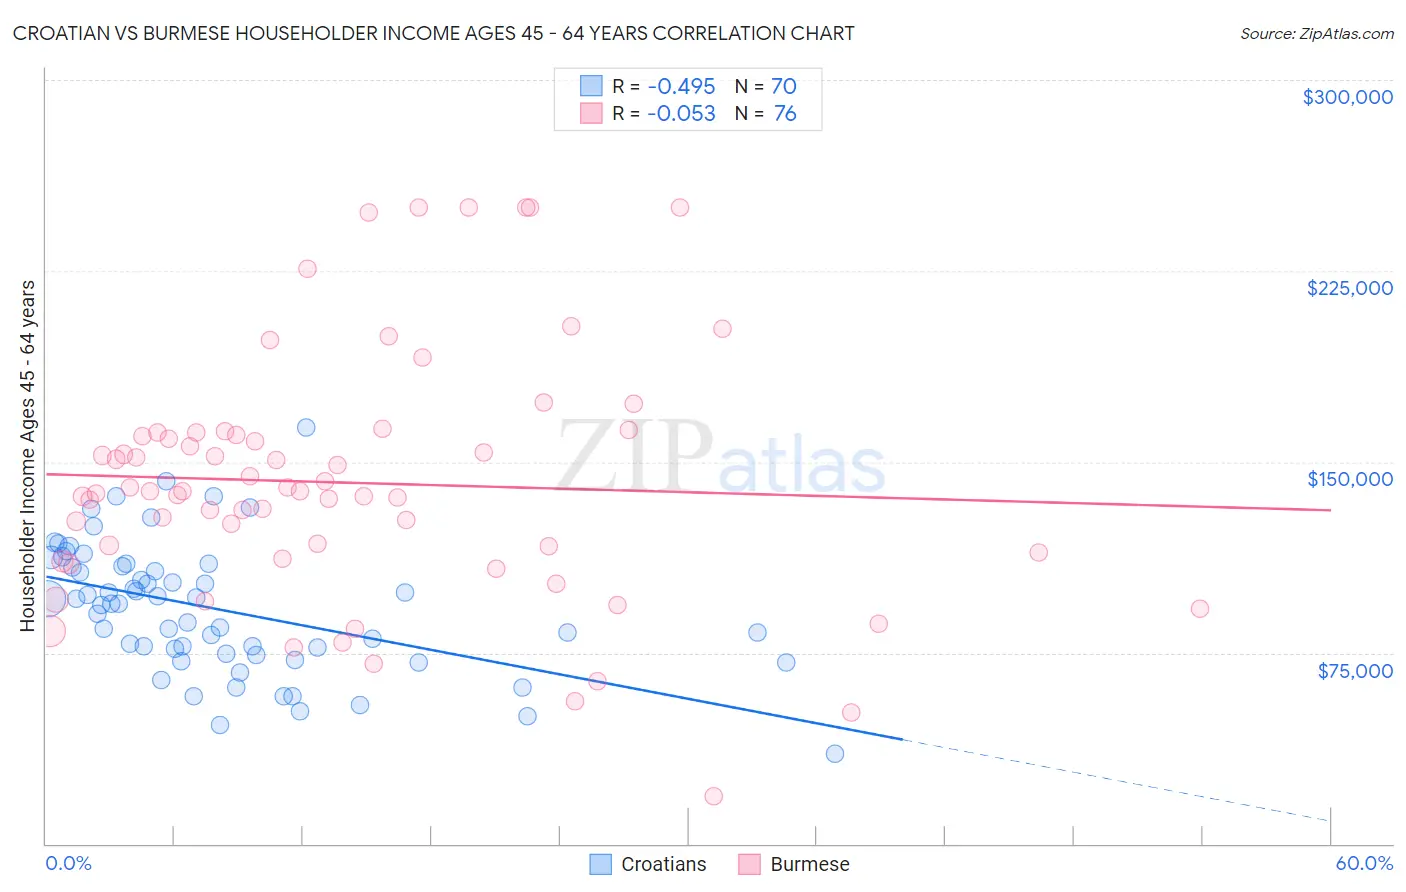 Croatian vs Burmese Householder Income Ages 45 - 64 years